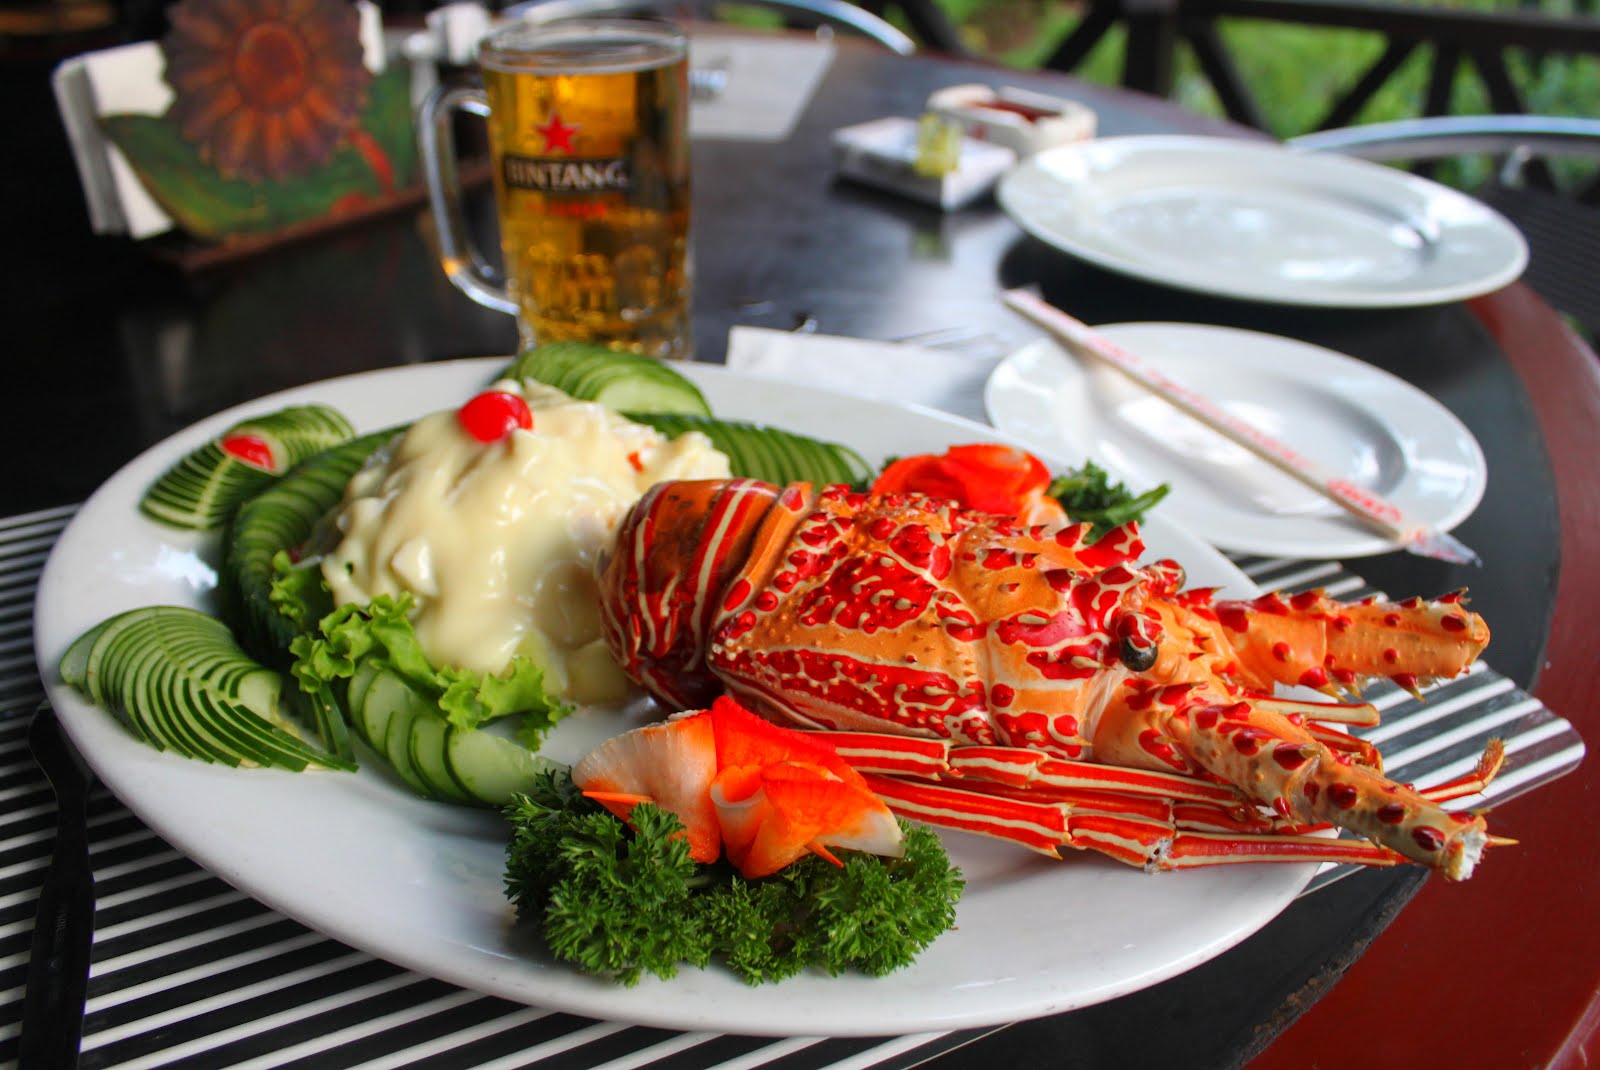 https://blogger.googleusercontent.com/img/b/R29vZ2xl/AVvXsEg21UMwIfNJsjxO6a2eZbgYCqwgmpKZ710LKUqfWPTb4RkBvxFQvdUVbp4ln7ZAw6ZdNk31C4AW5e6pTO36Wg6vbnQj7c8NfTD5vbbfmgxbqgorX5L0UFolrHhdtxisQNzkrLMQQsnPPw/s1600/Lobster+Lunch+in+Jakarta+Indonesia.jpg